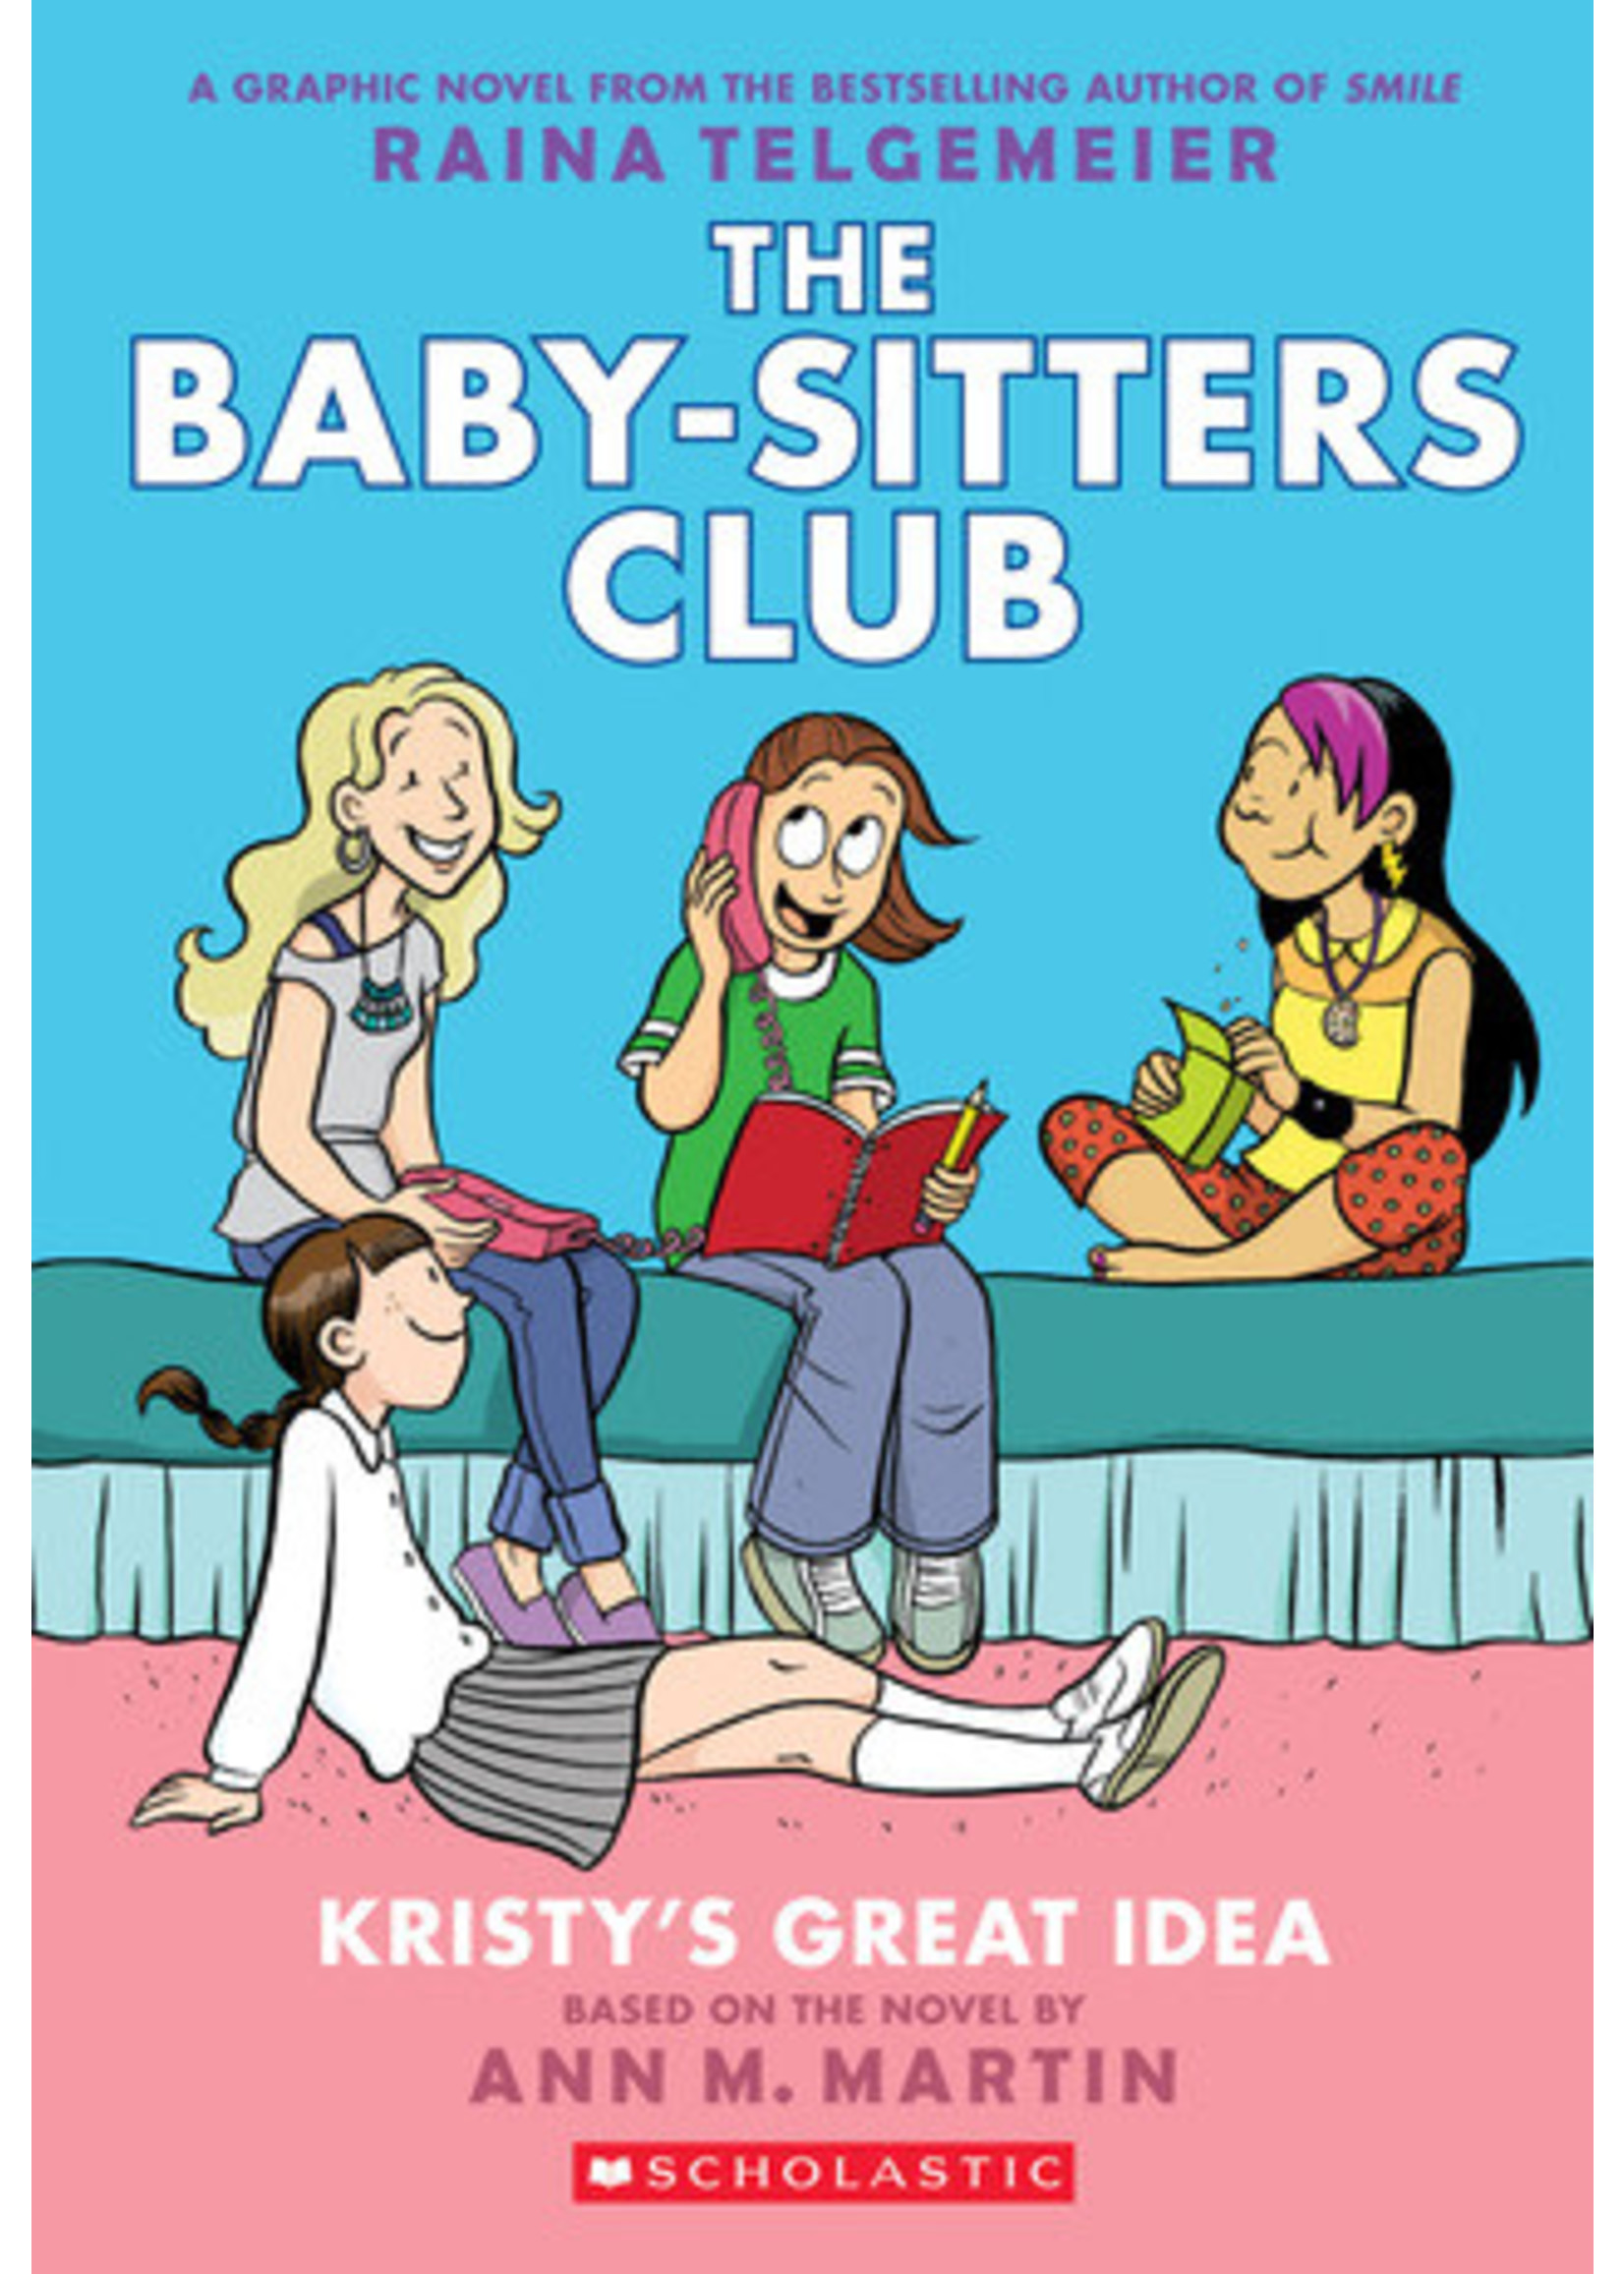 Kristy's Great Idea (Baby-Sitters Club Graphic Novels #1) by Raina Telgemeier